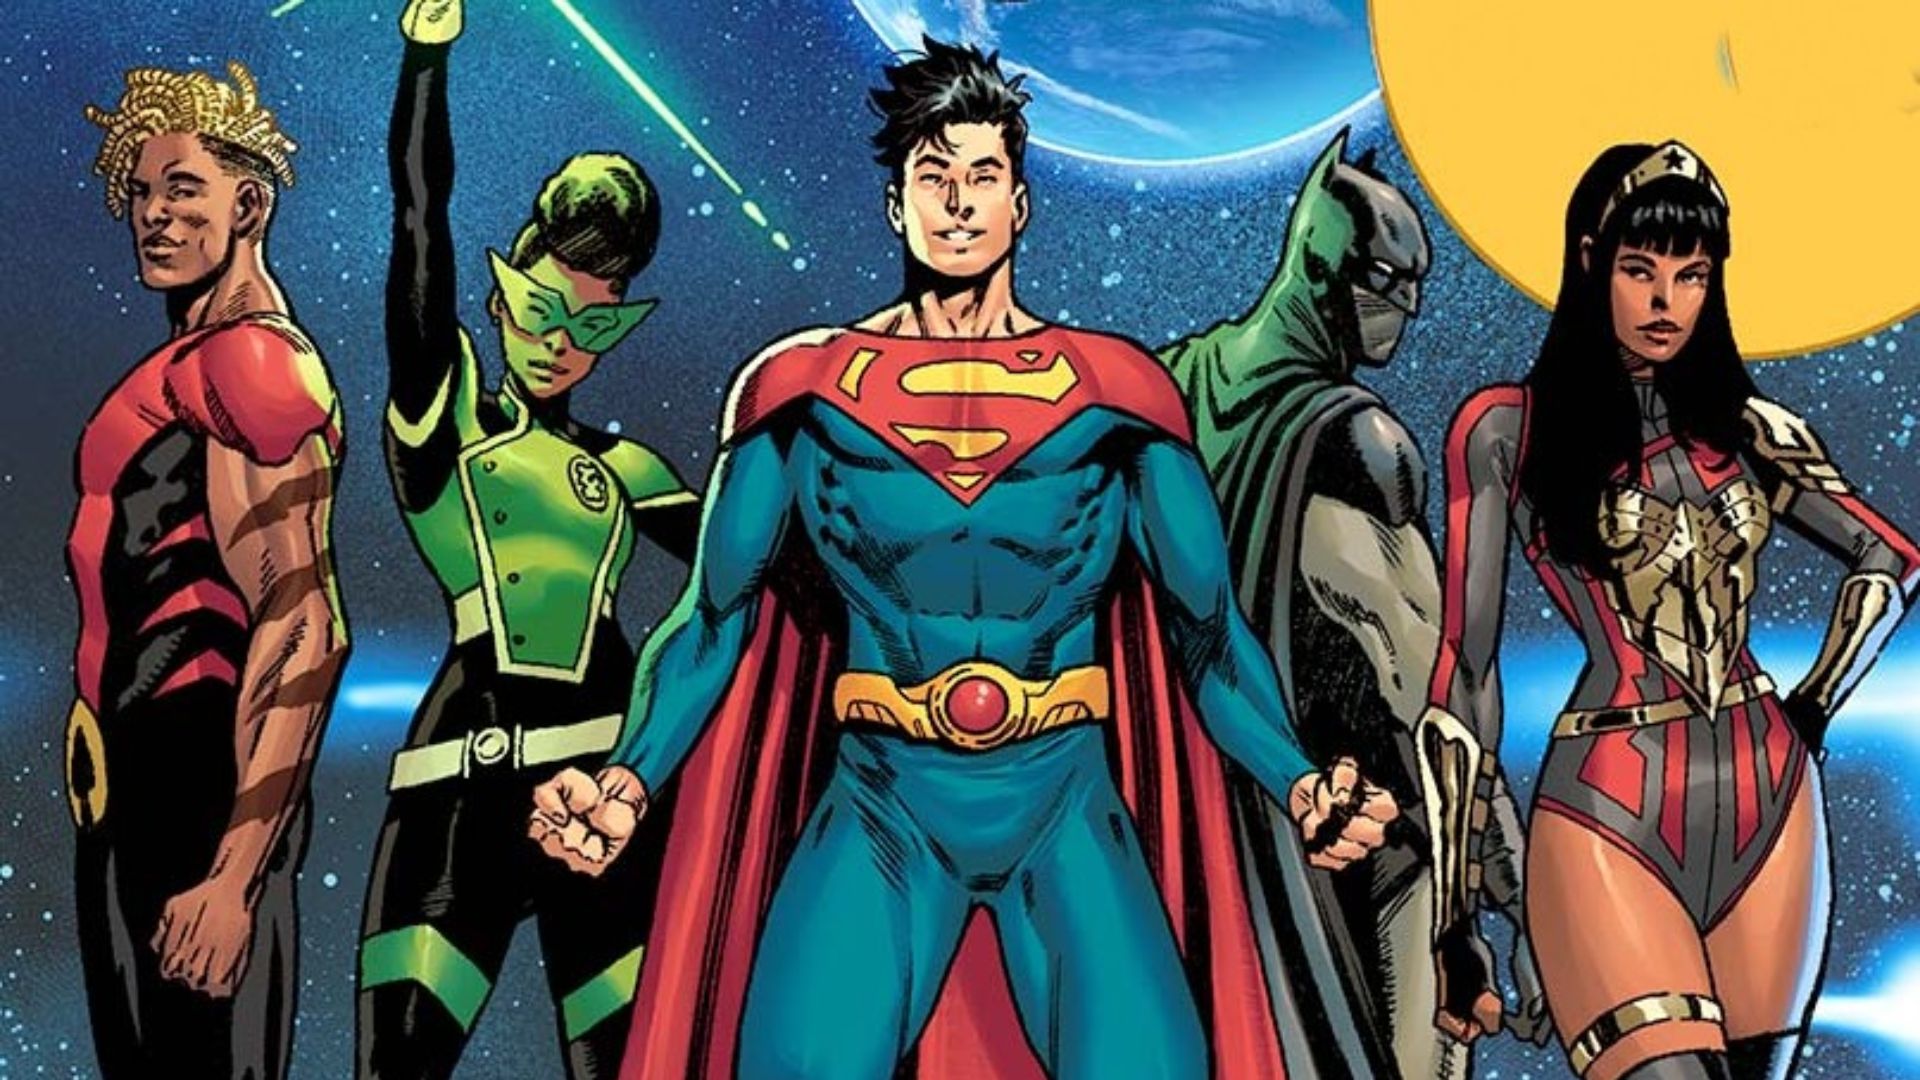 Dark Crisis - what DC superteams can replace the dead Justice League?